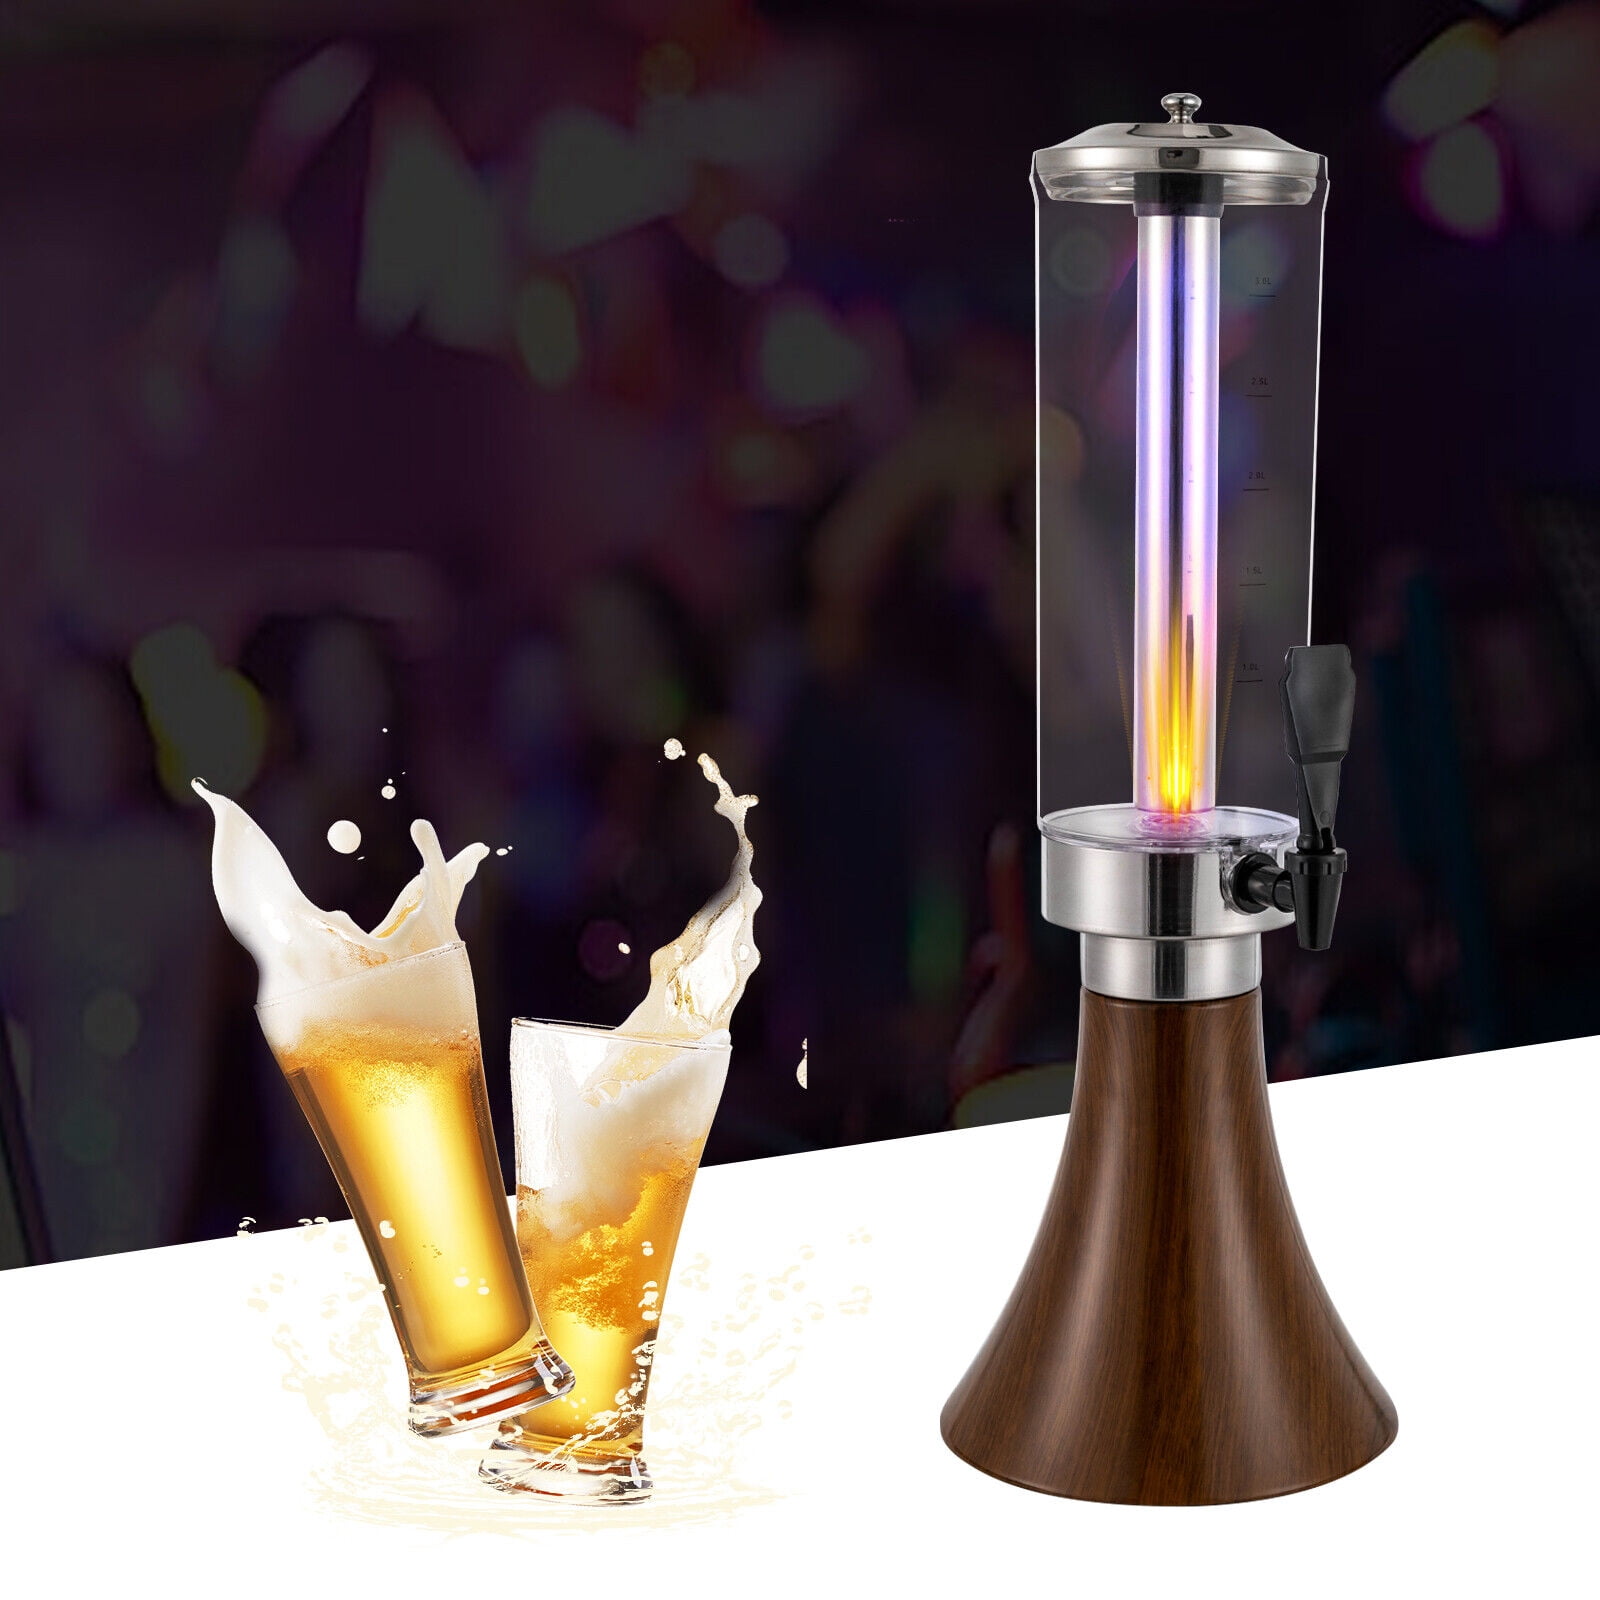 KK KMKGOKO Mimosa Tower, 3L/100oz Drink Tower Dispenser with Ice Tube and LED Light, Tabletop Beer Dispenser (1pc)